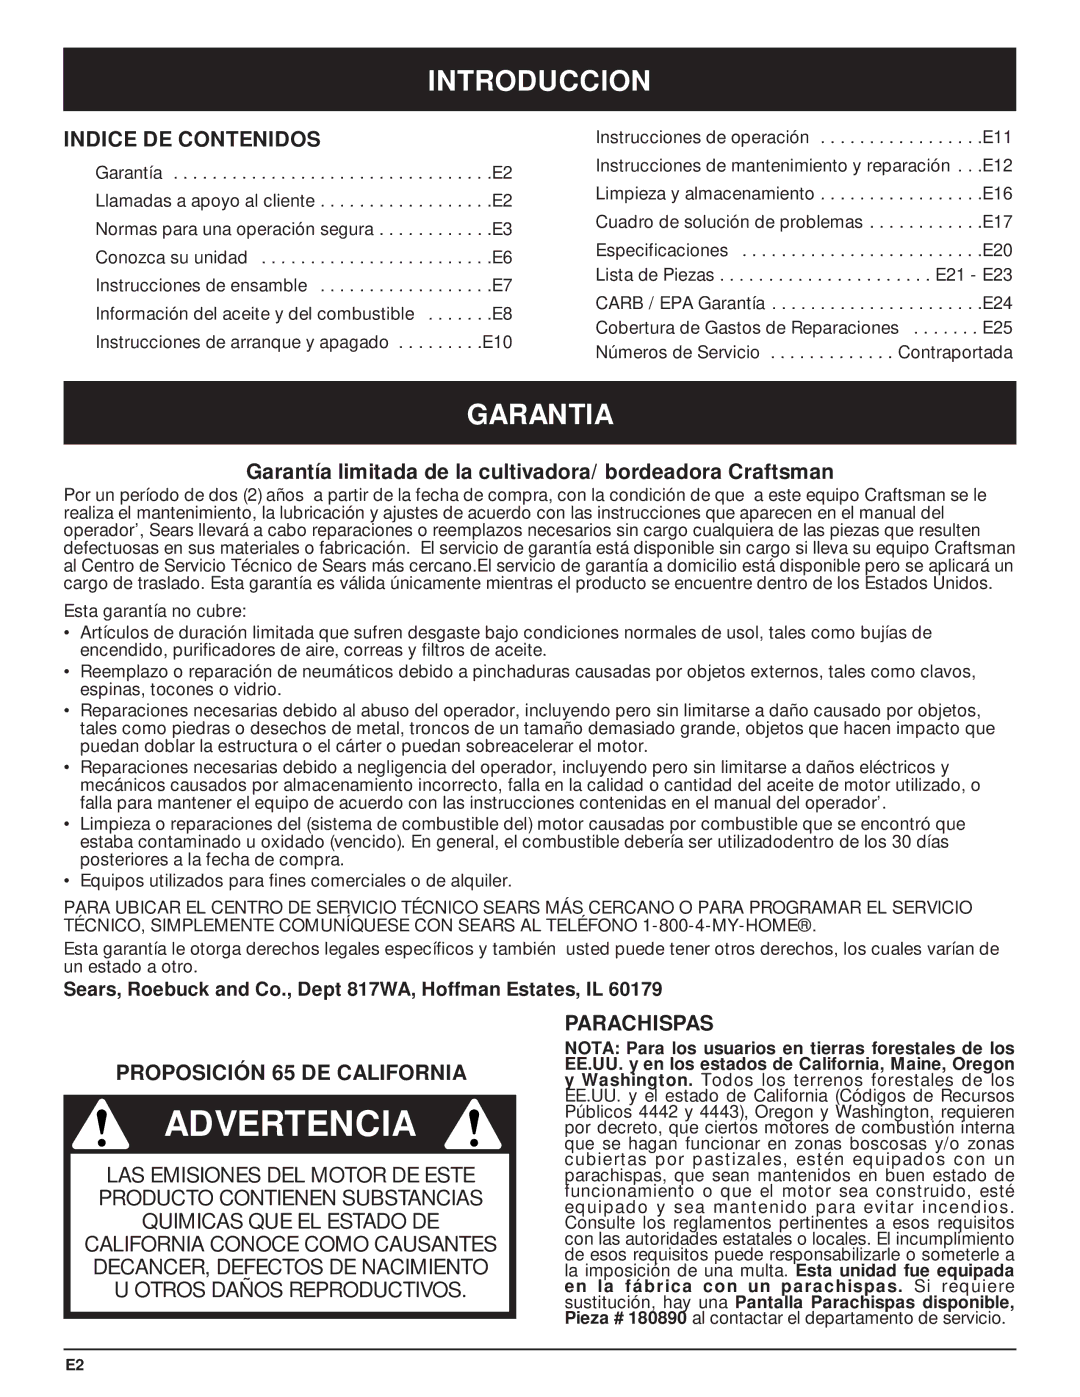 Craftsman 316.29271 manual Introduccion, Garantia, Indice DE Contenidos, Proposición 65 DE California, Parachispas 